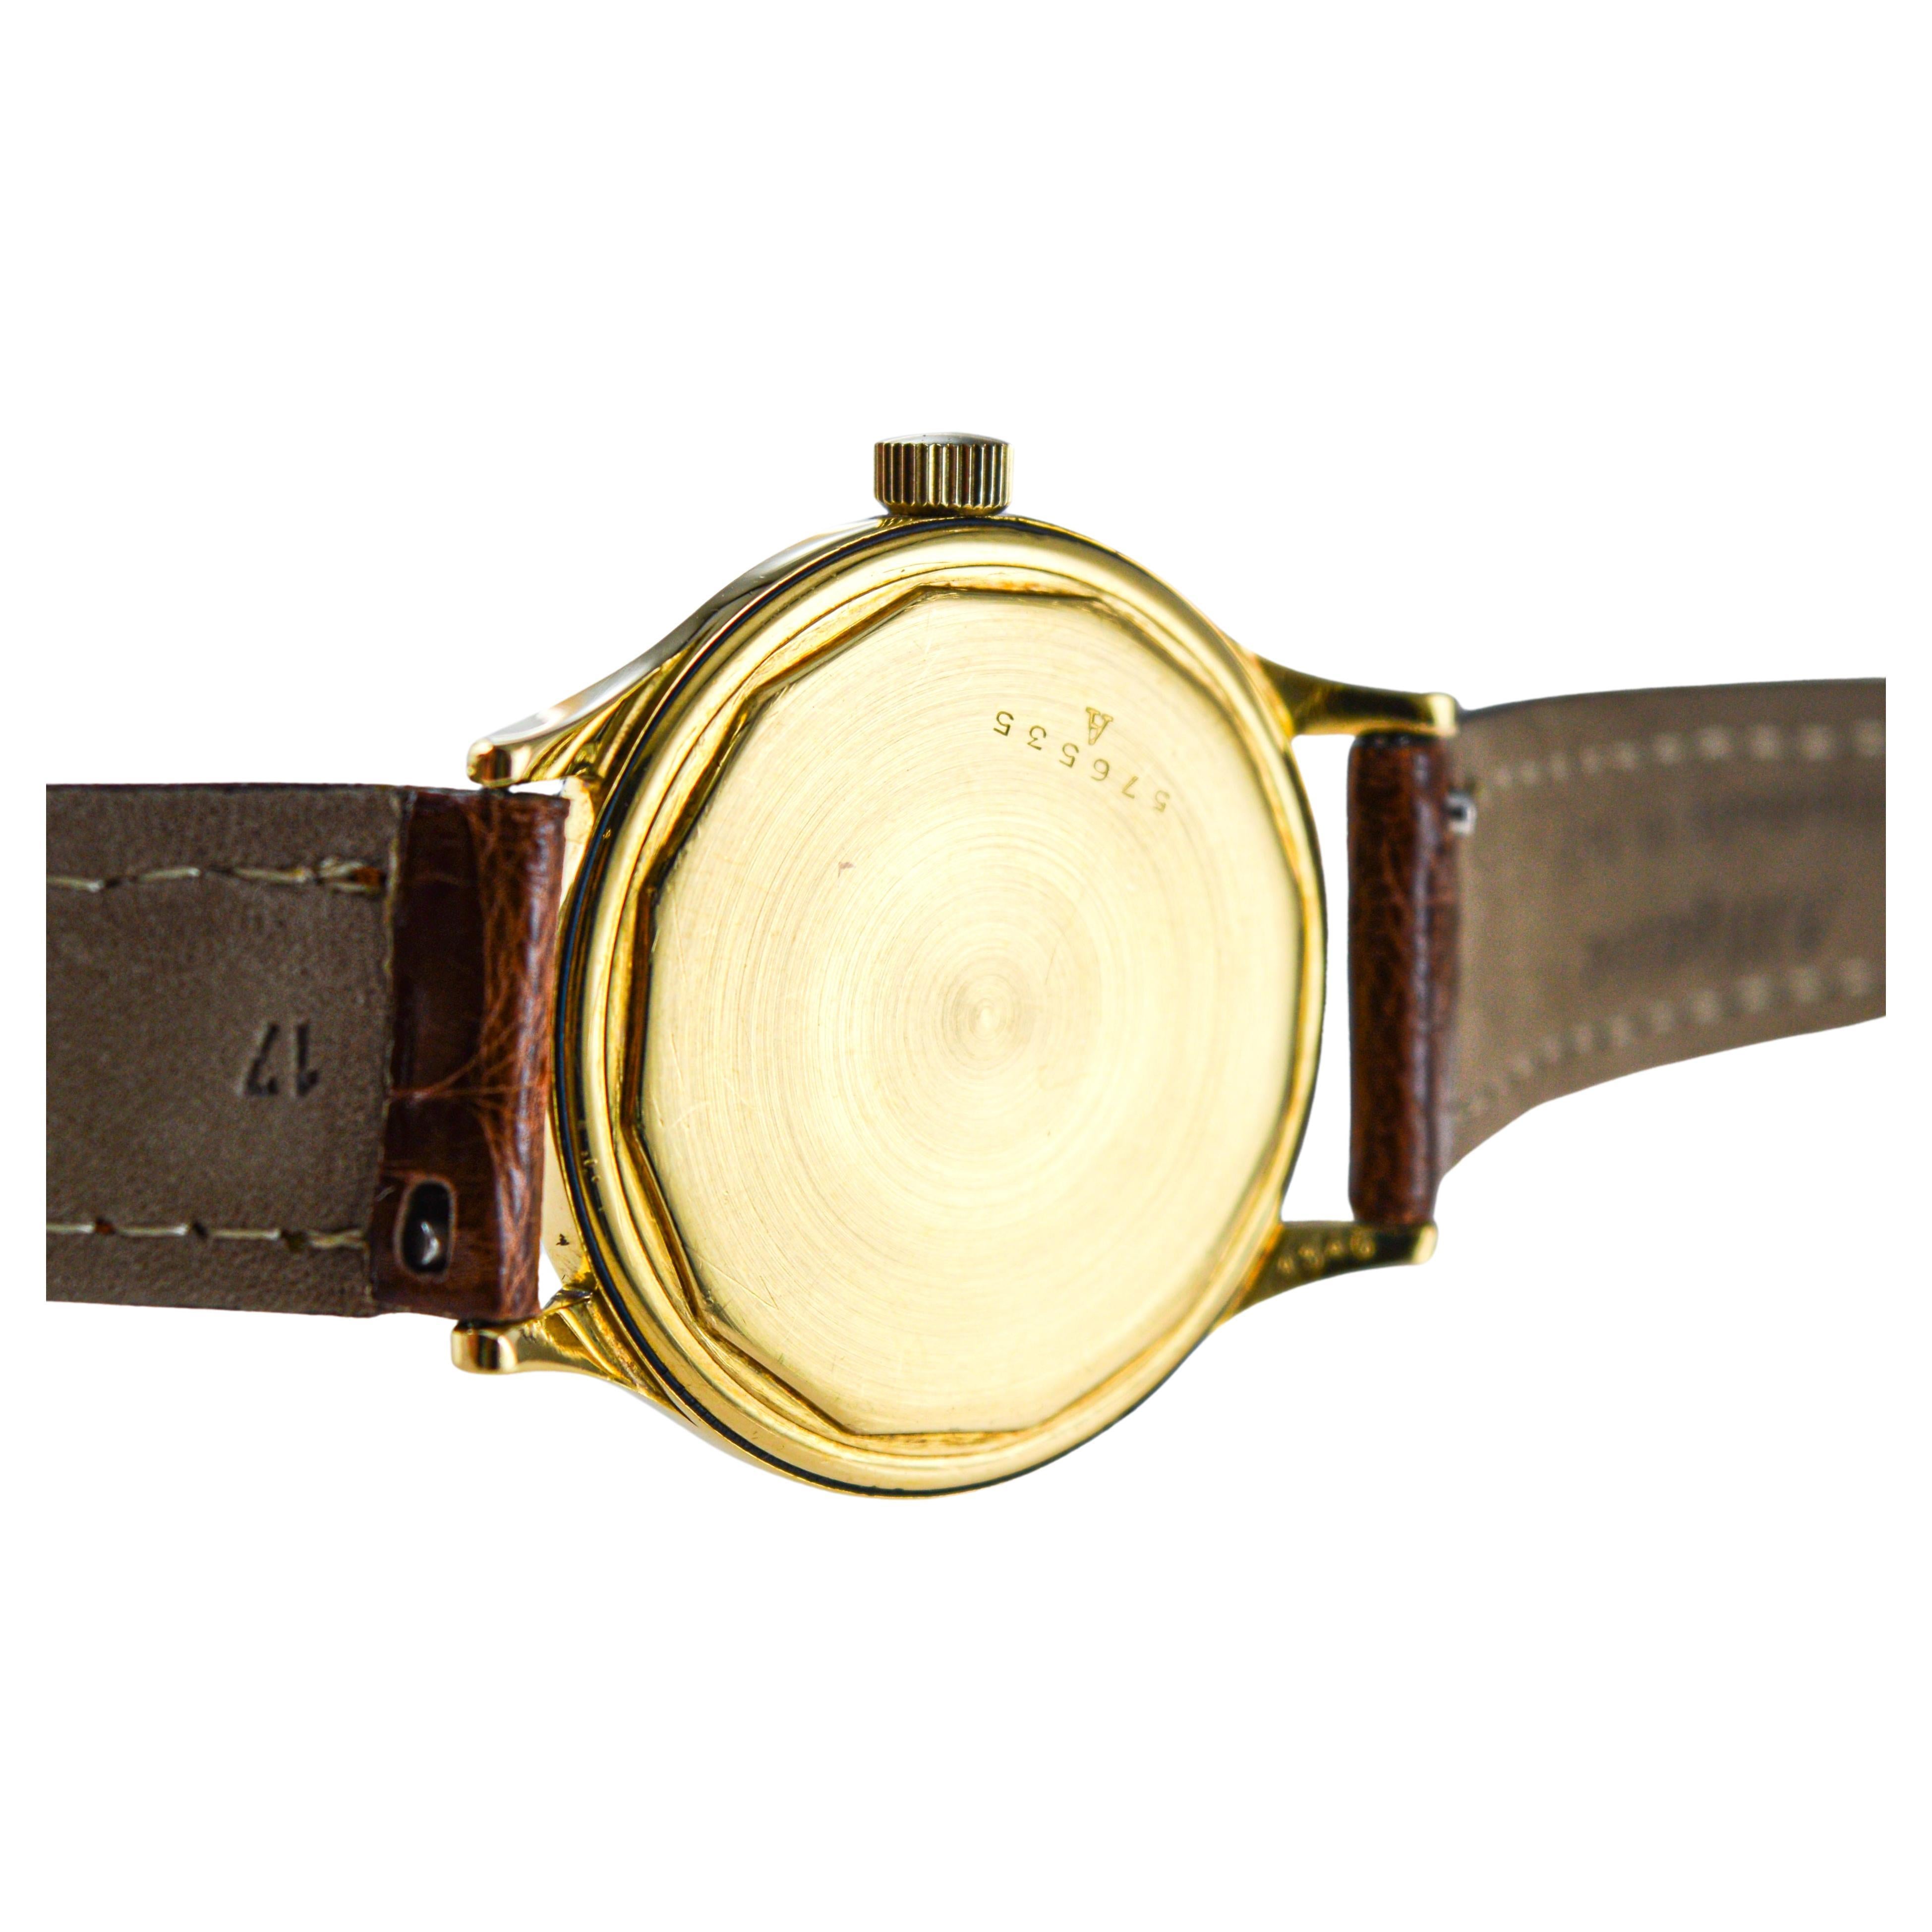 Cartier Paris 18Kt. Gold Calatrava Style Watch, from 1950's European Watch Co.  For Sale 8